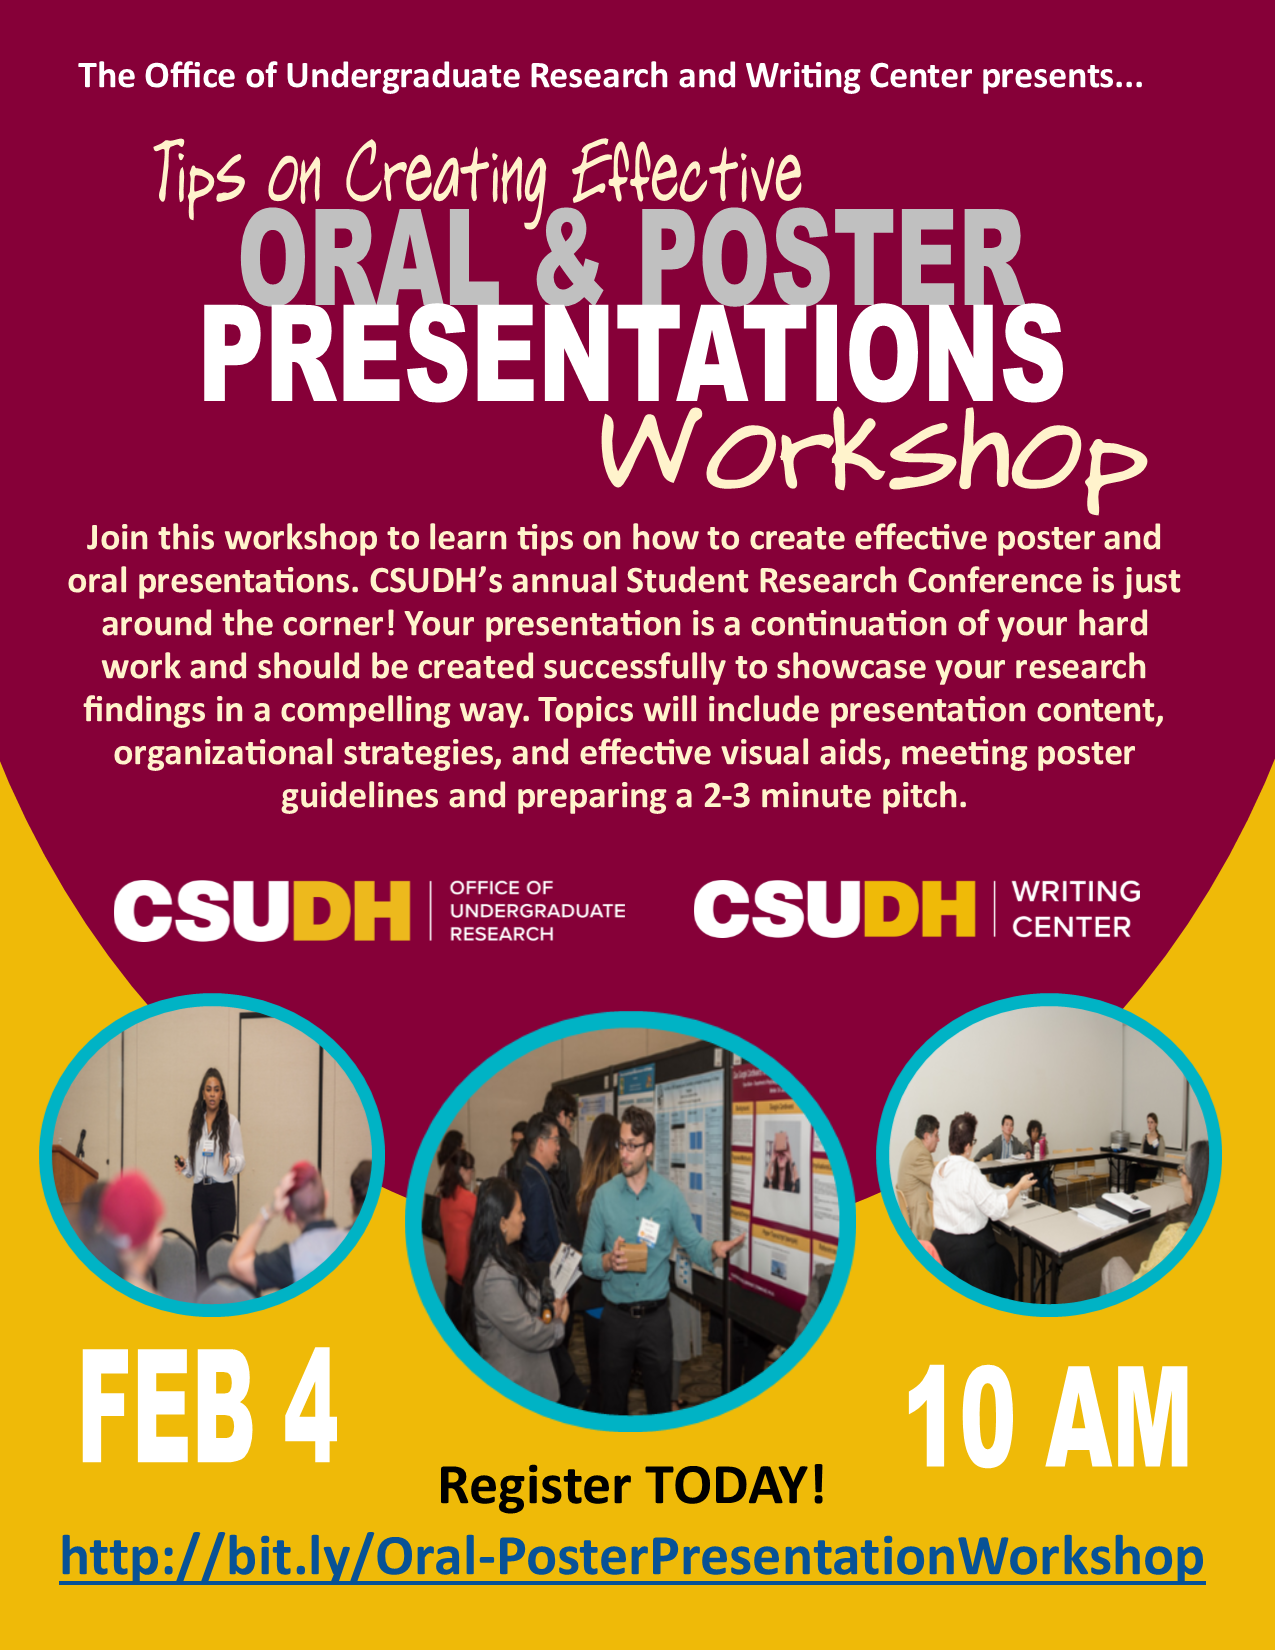 ips on Creating Effective Oral & Poster Presentations Workshop